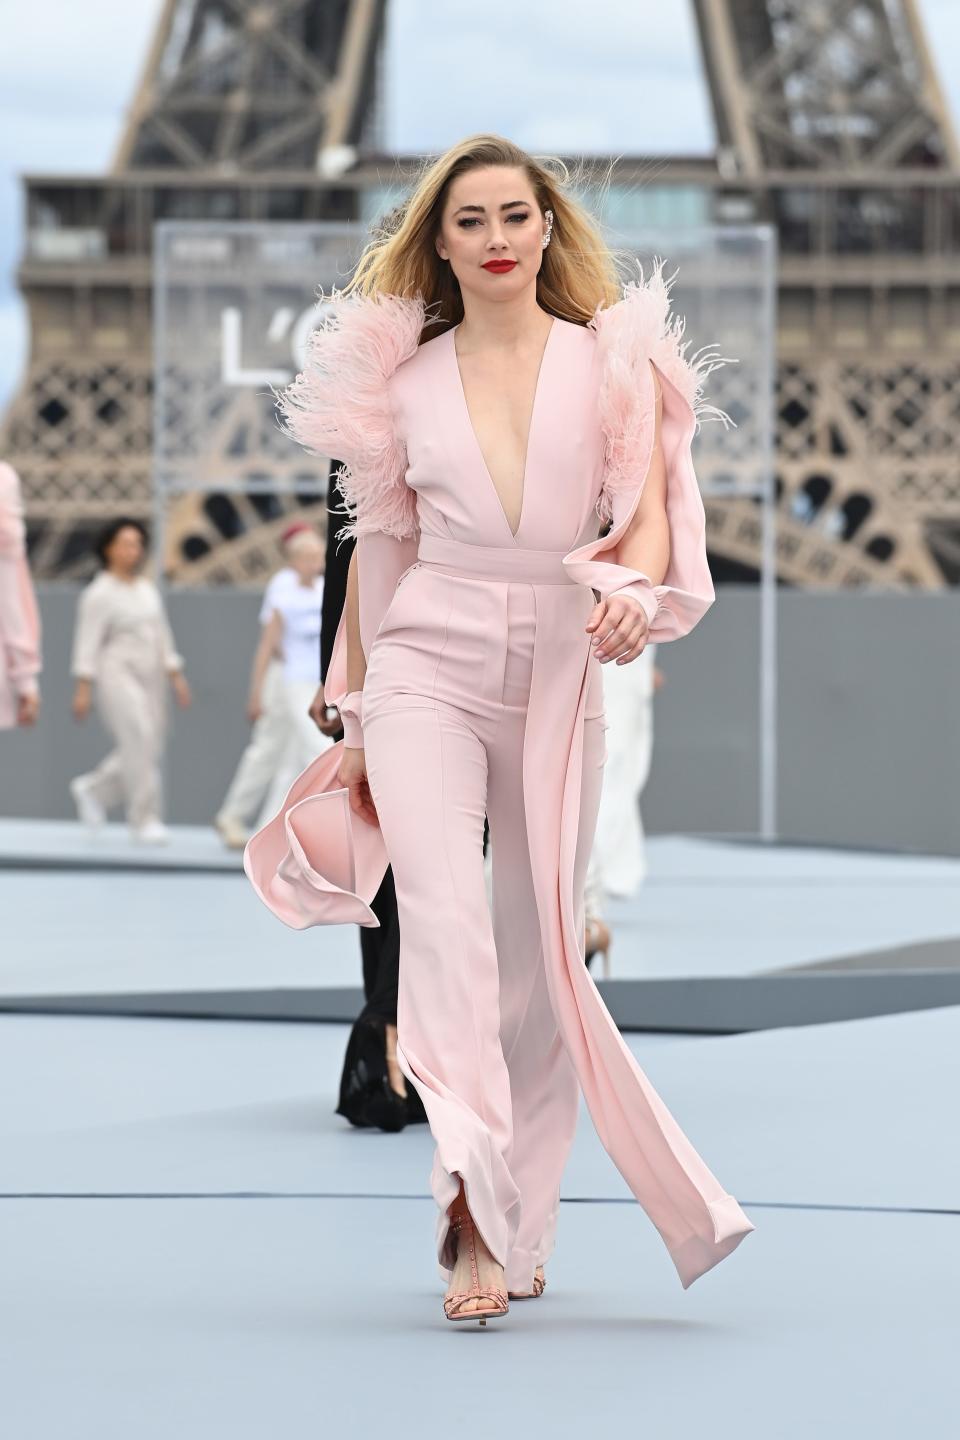 Amber Heard walks the runway during Paris Fashion Week on Oct. 3, 2021 in Paris.